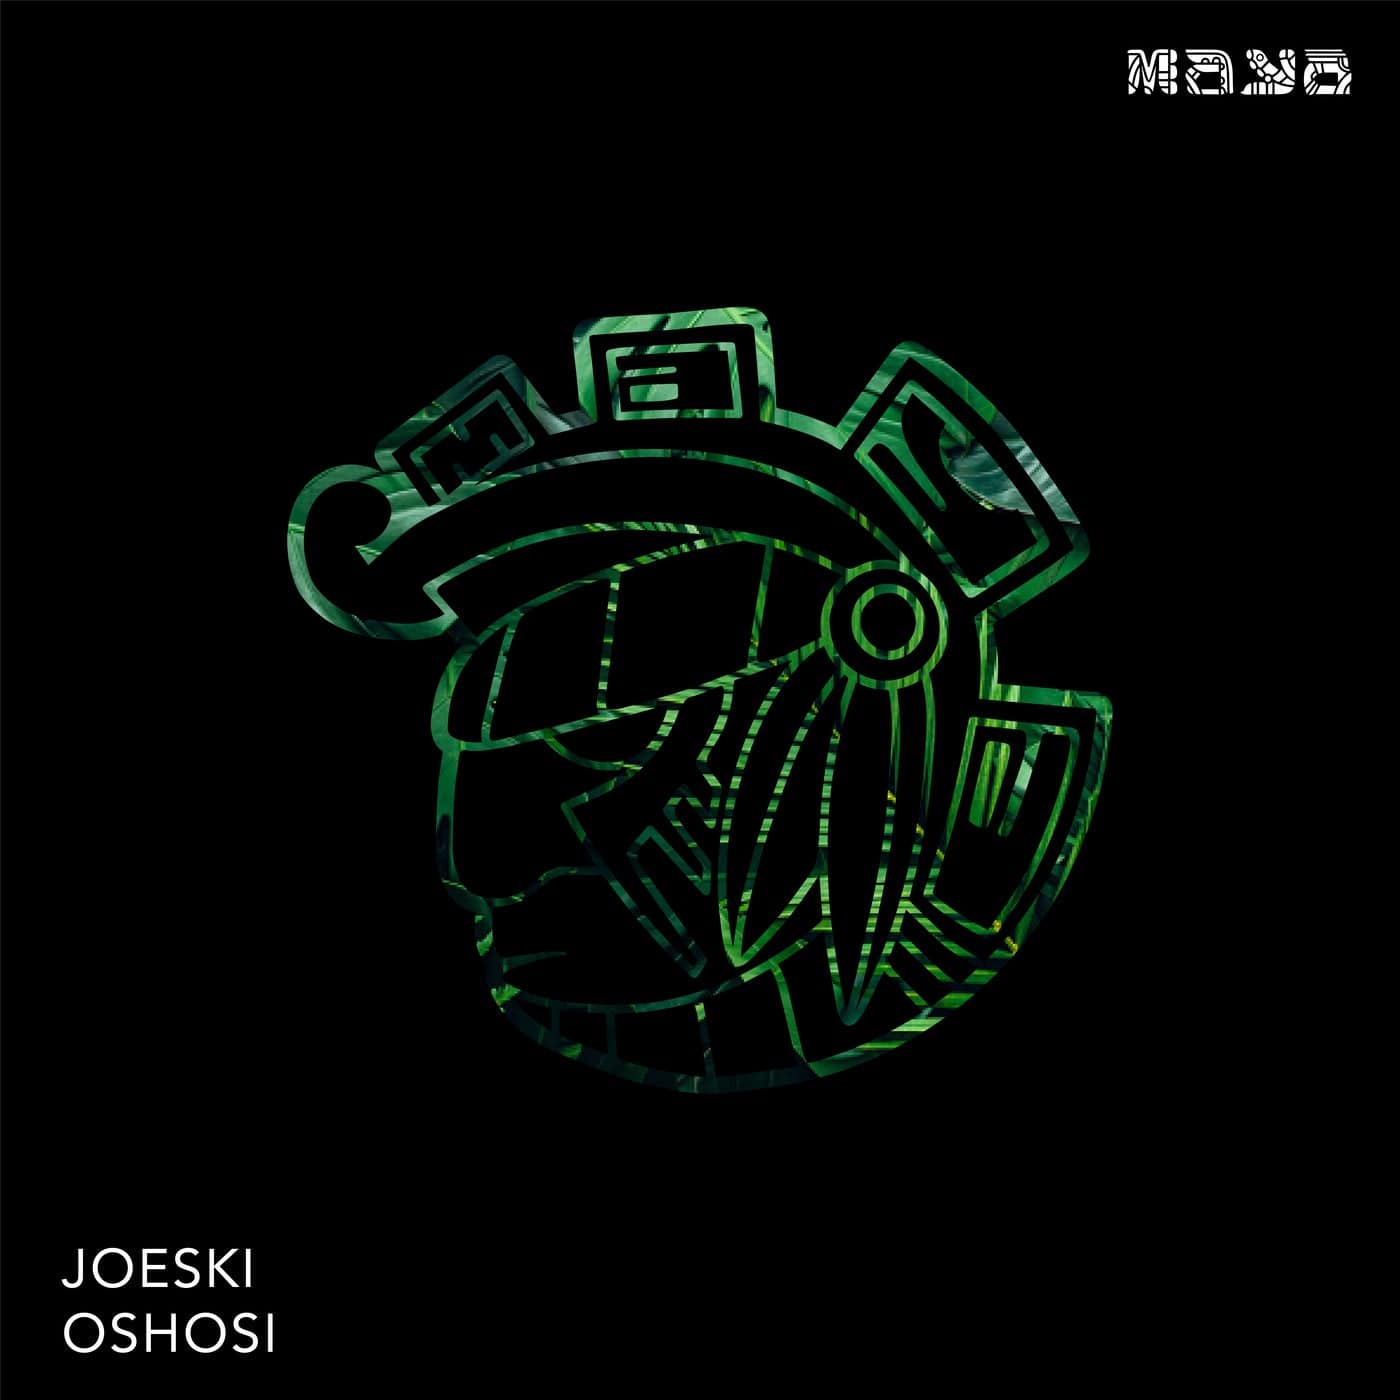 Download Joeski - Oshosi on Electrobuzz